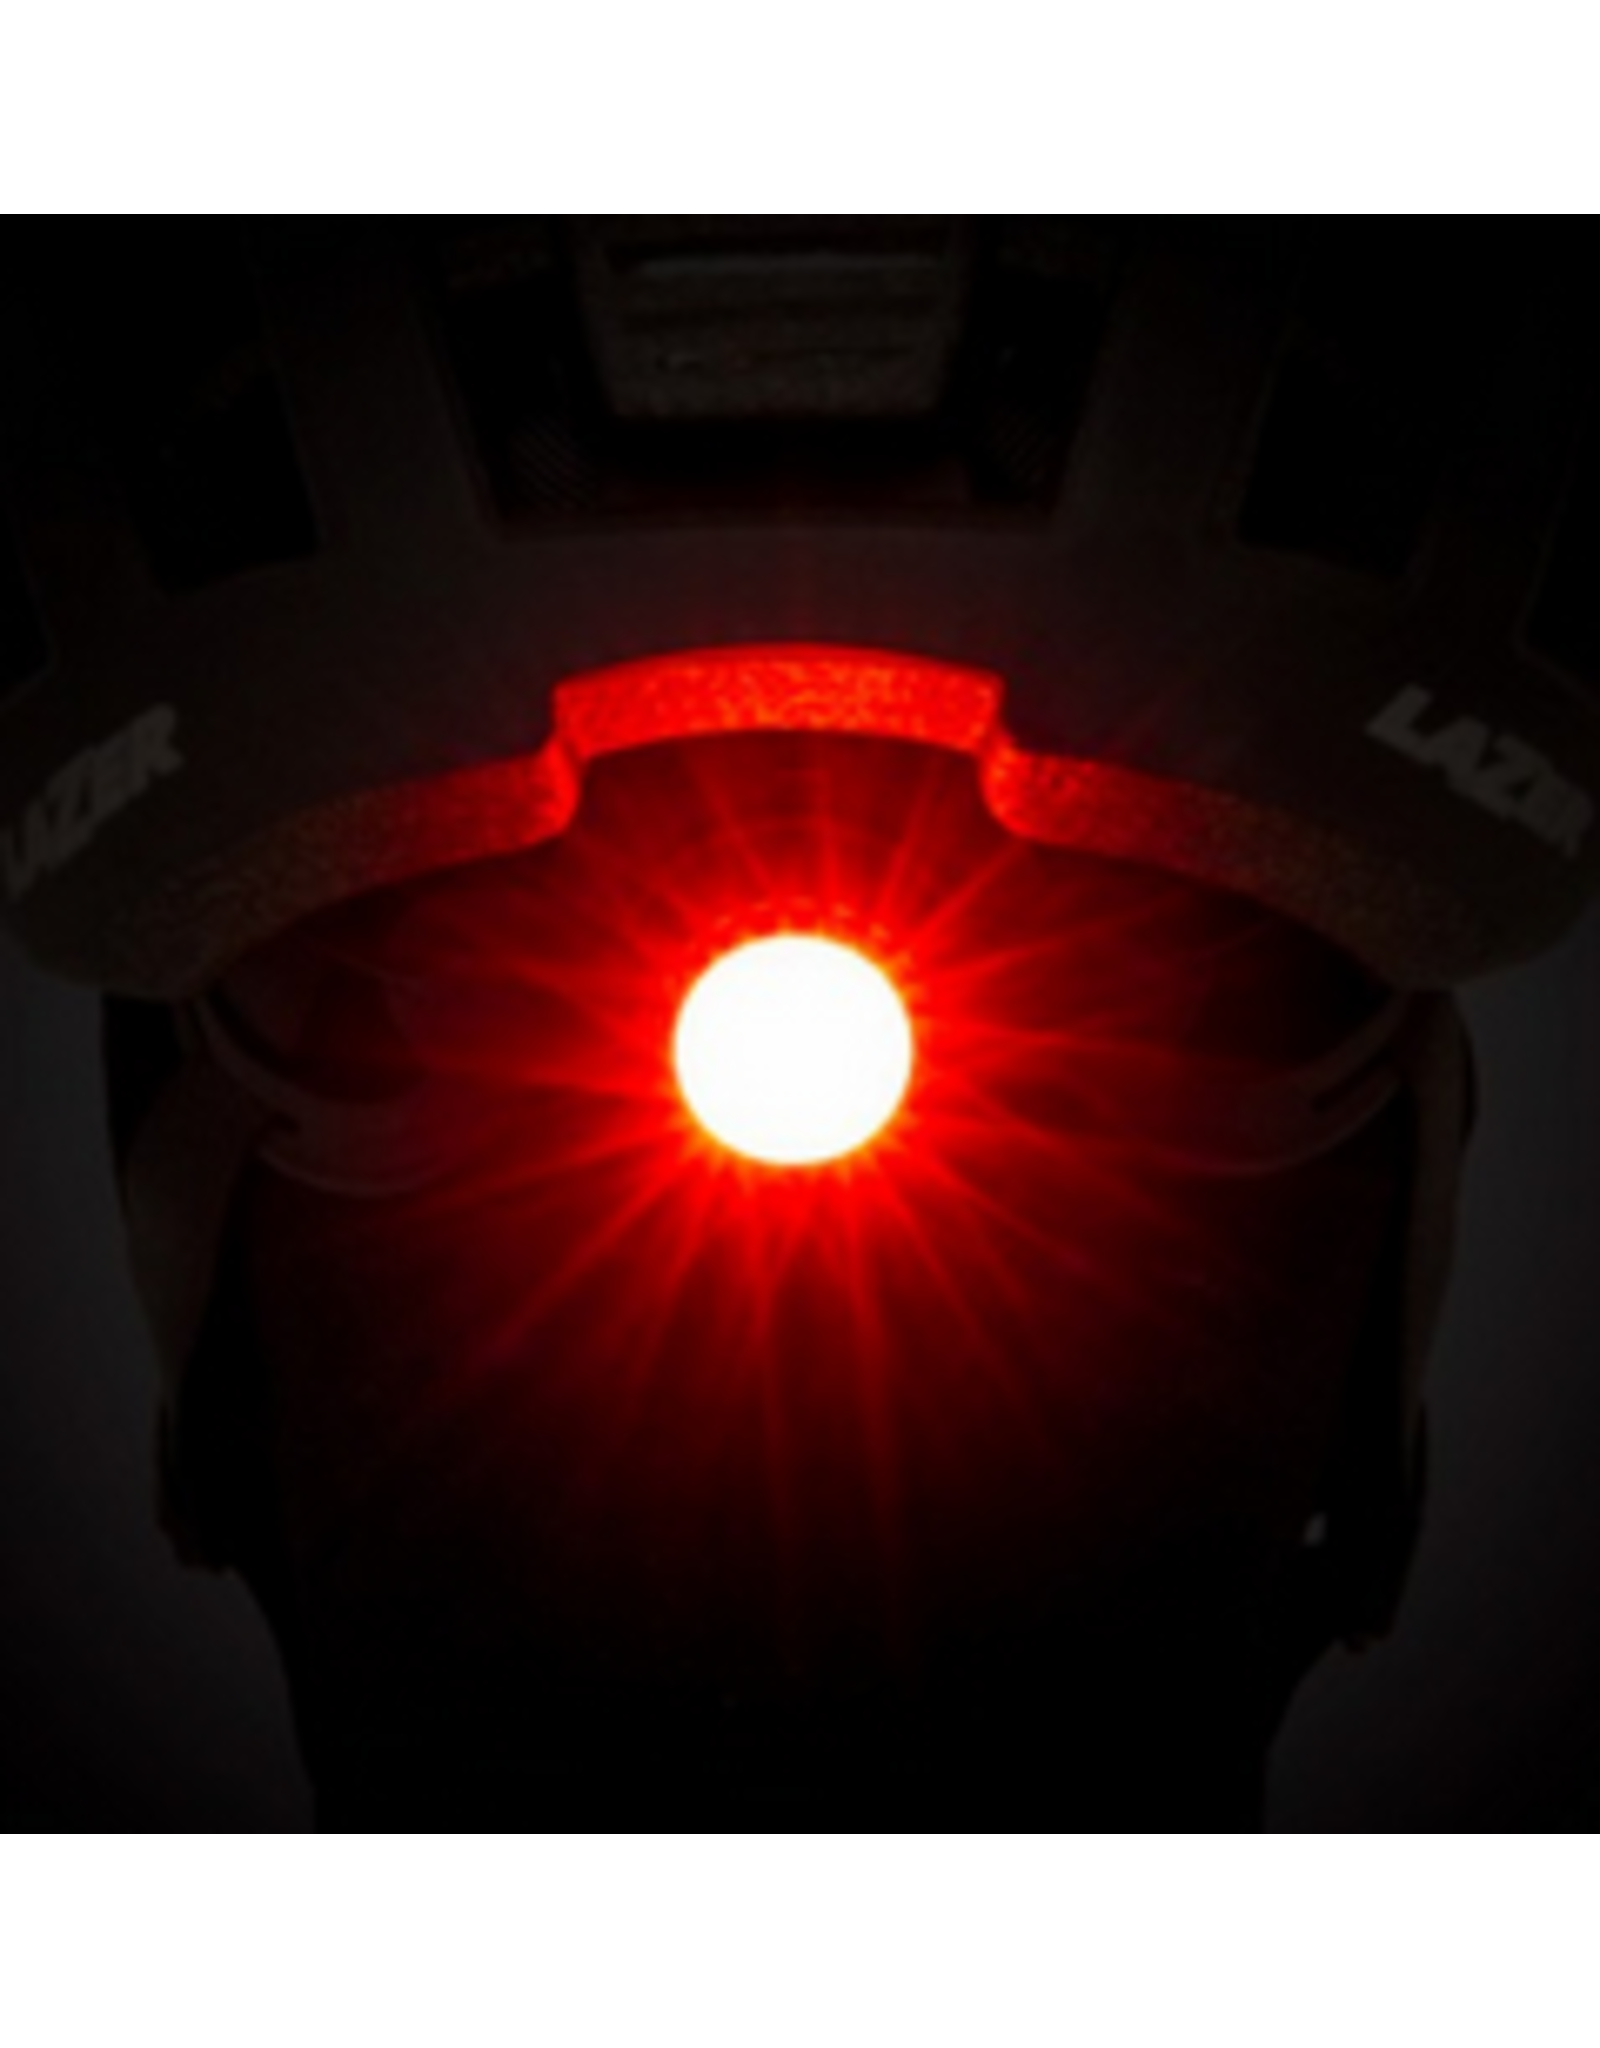 LAZER Lazer Helmets NEXT+LED